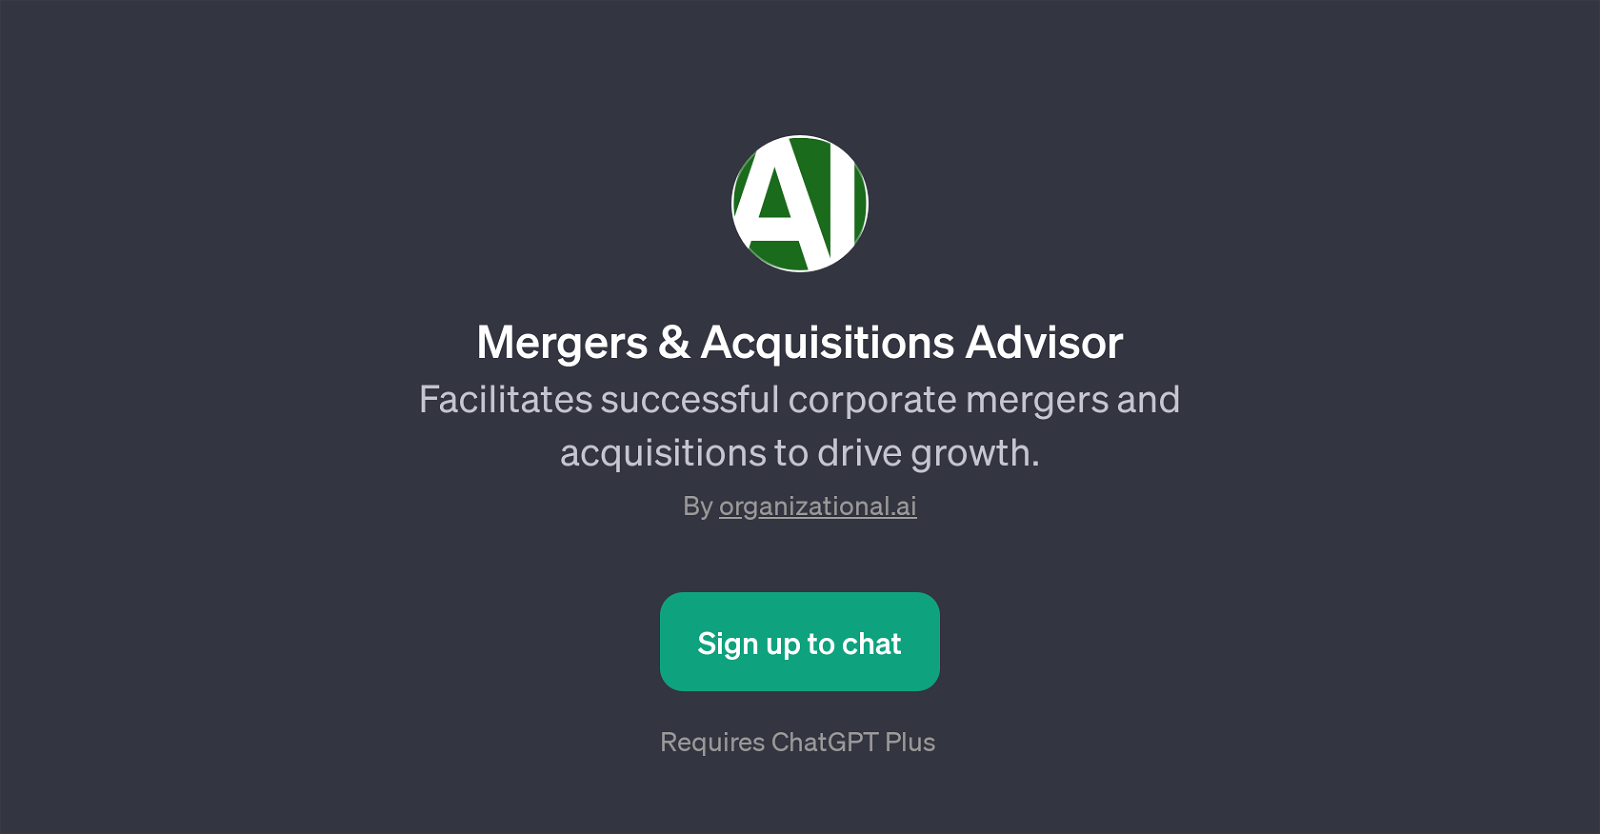 Mergers & Acquisitions Advisor website